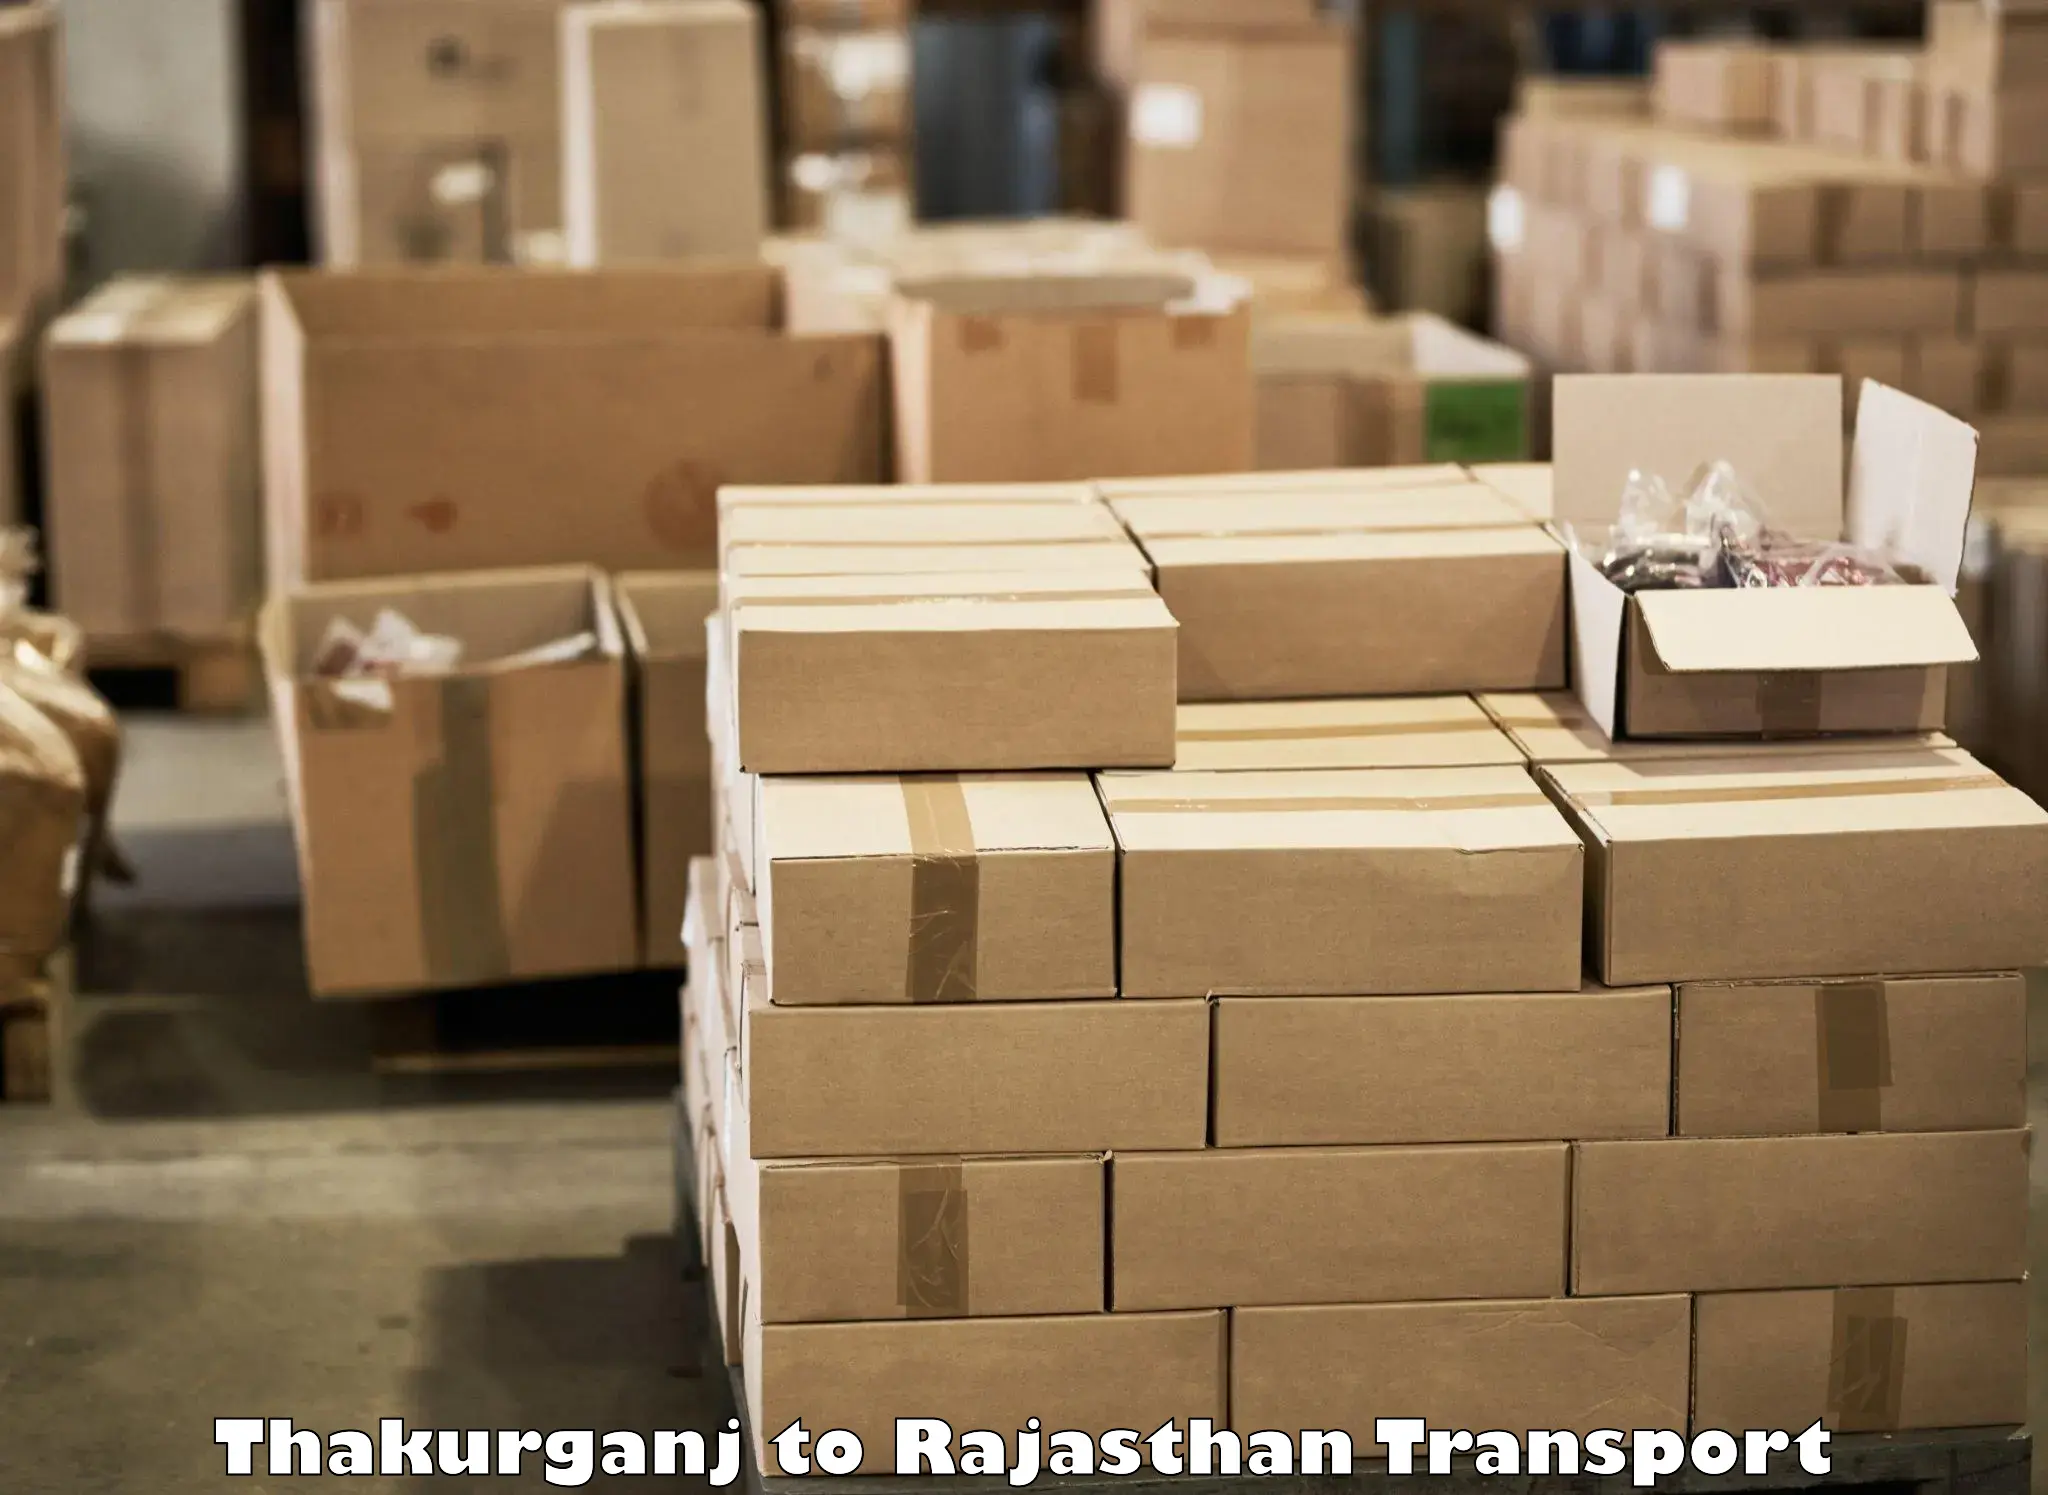 Truck transport companies in India Thakurganj to Rajasthan